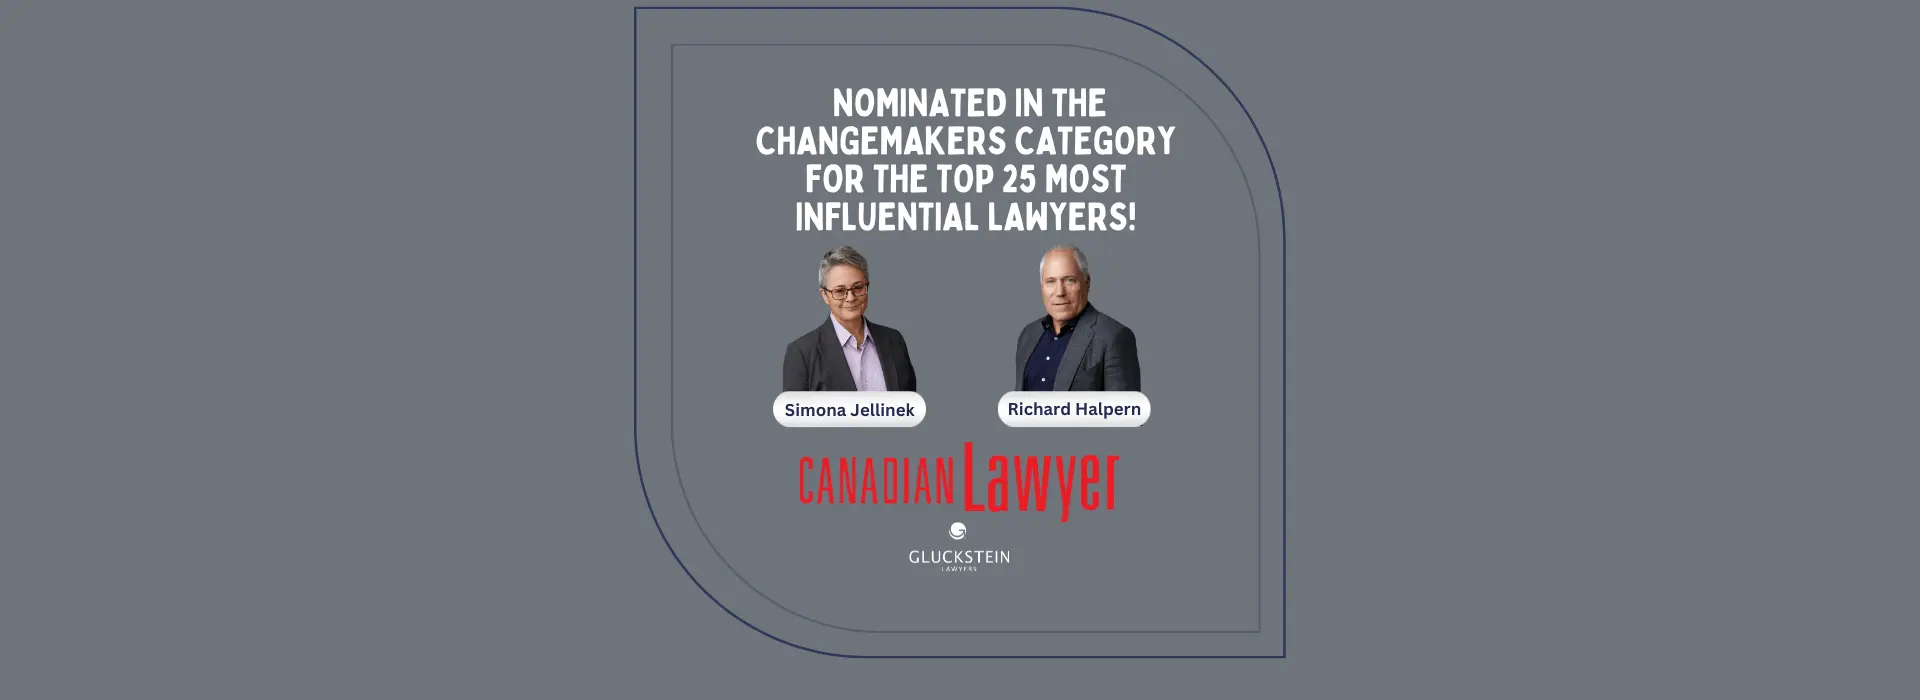 Simona Jellinek and Richard Halpern Nominated in Changemakers Category